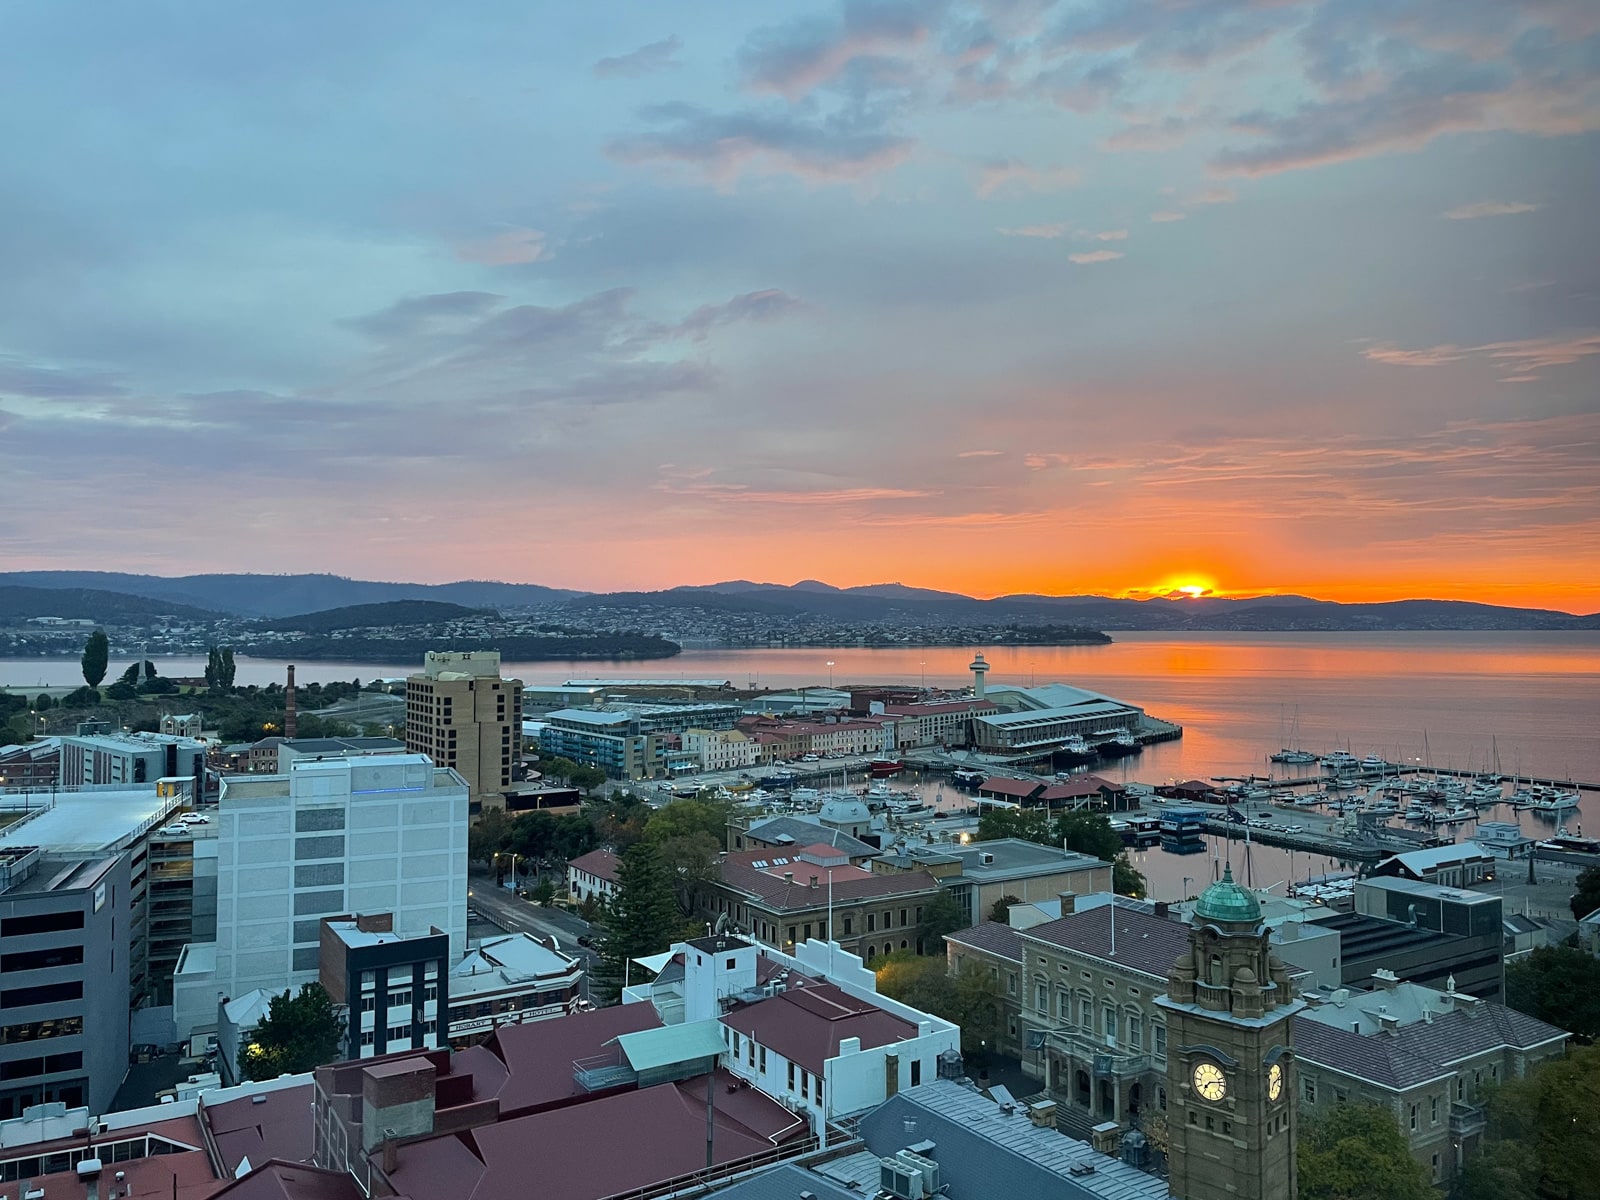 A very orange sunrise seen from a high rise building in Hobart, Australia